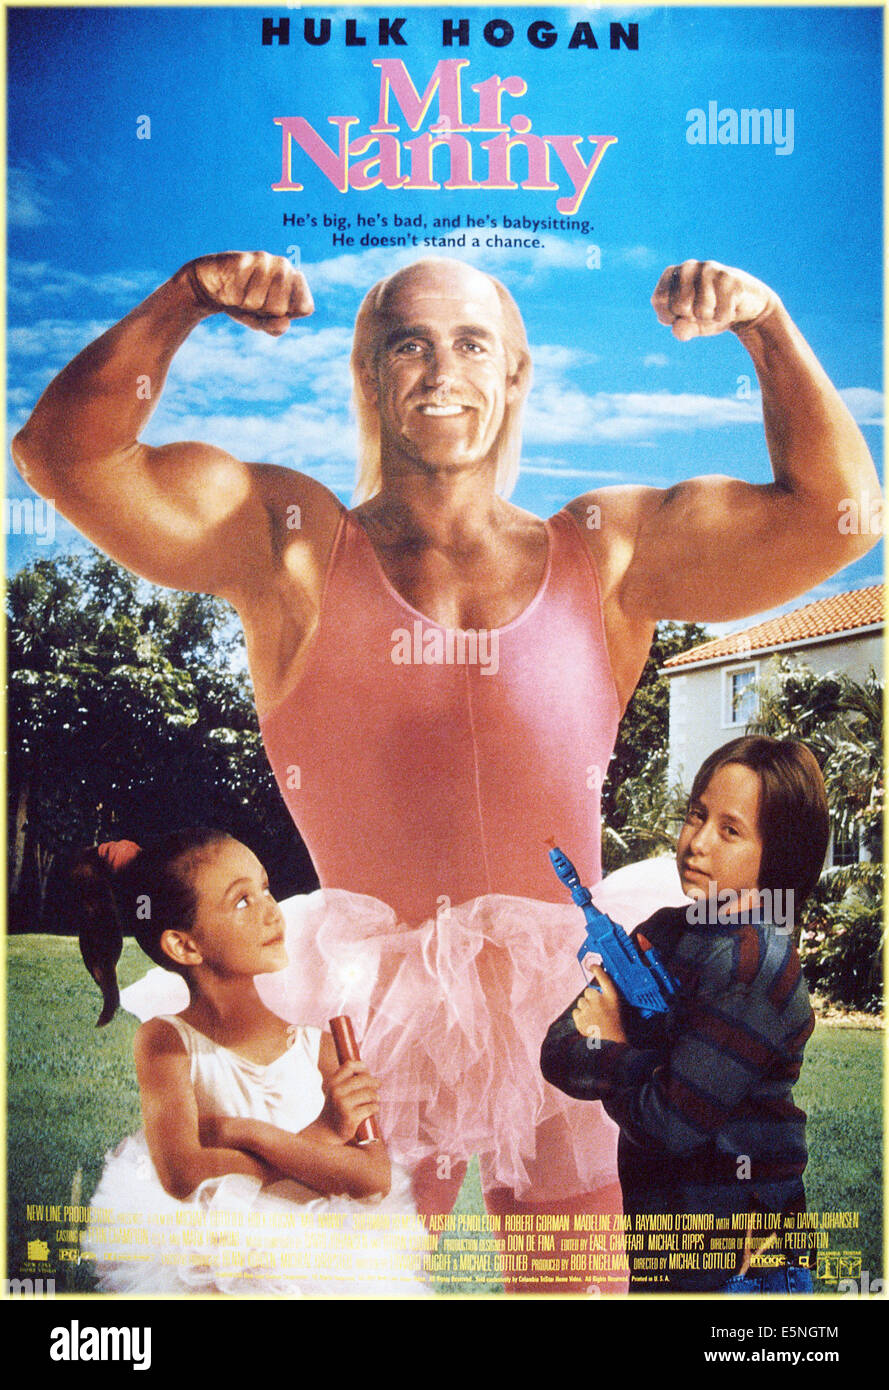 MR. NANNY, from left: Madeline Zima, Hulk Hogan, Robert Hy 1993, © New Line/courtesy Photo - Alamy